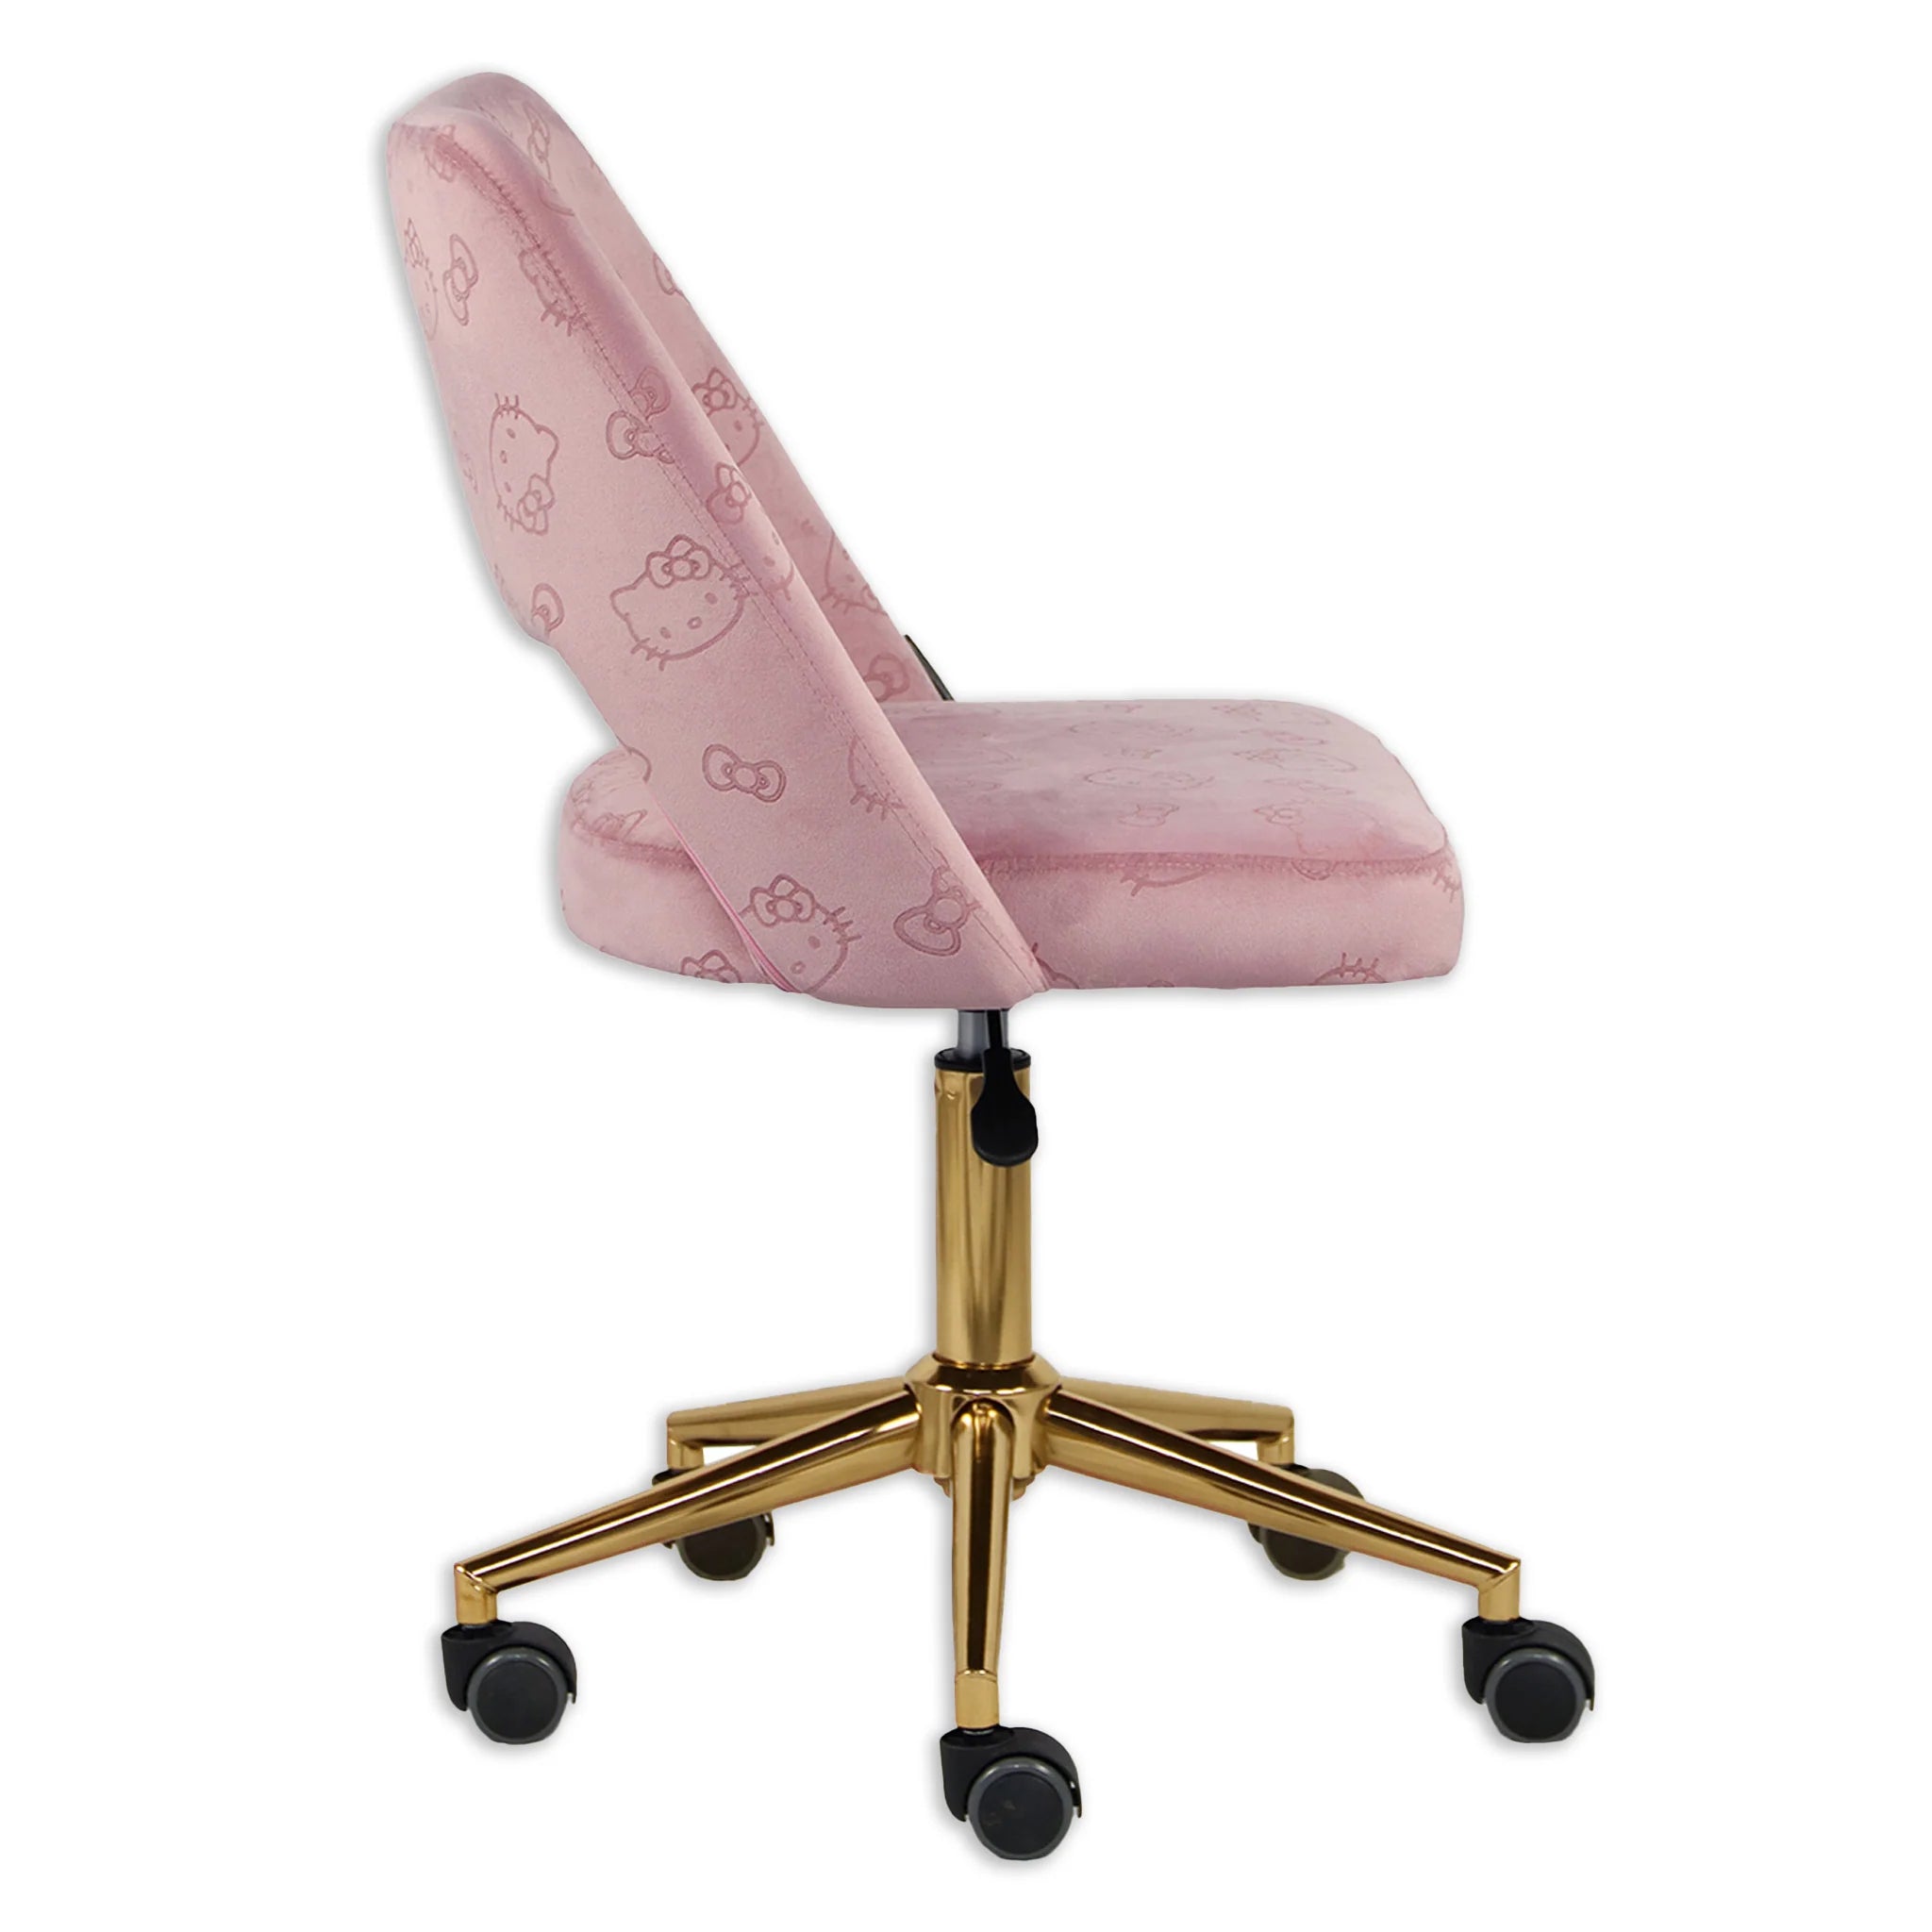 Impressions Vanity - Hello Kitty Vanity Swivel Chair Pink